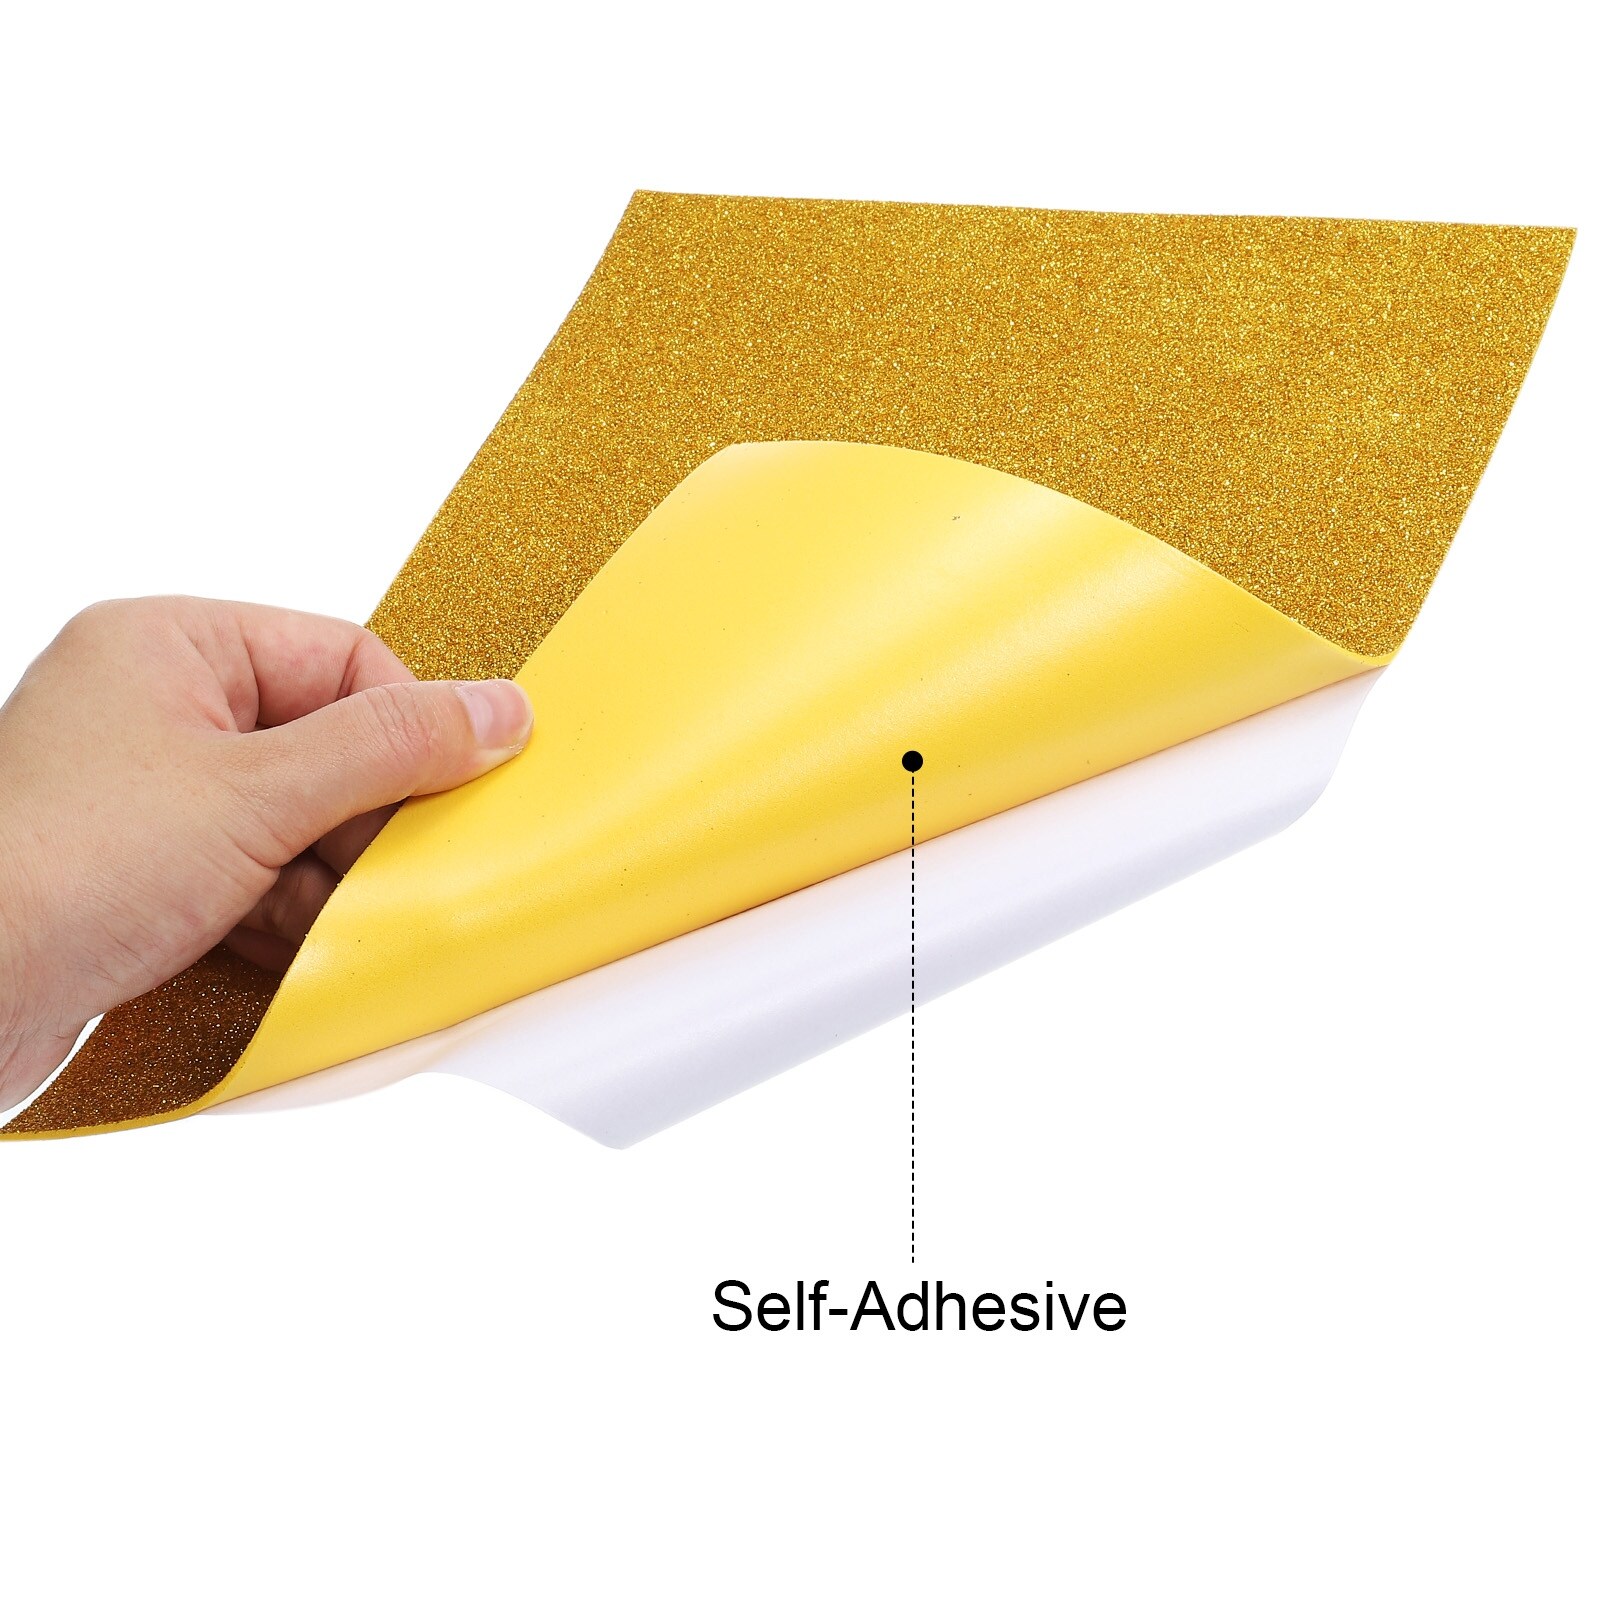 Glitter EVA Foam Sheets Soft Paper Self-Adhesive 11.8 x 7.8 Inch